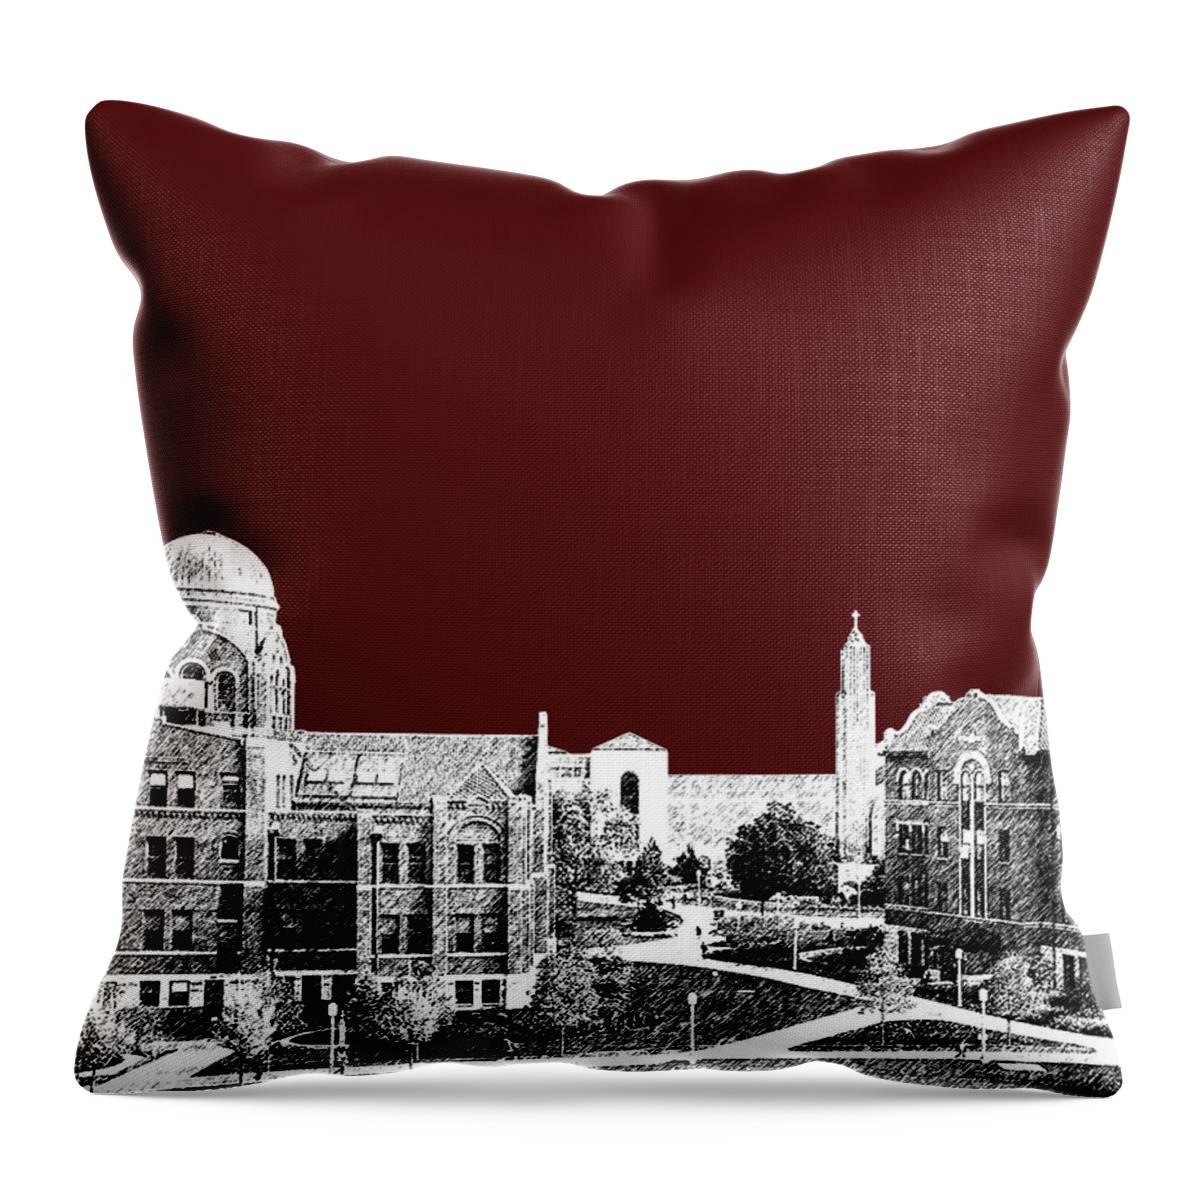  Throw Pillow featuring the digital art Loyola University Version 4 by DB Artist